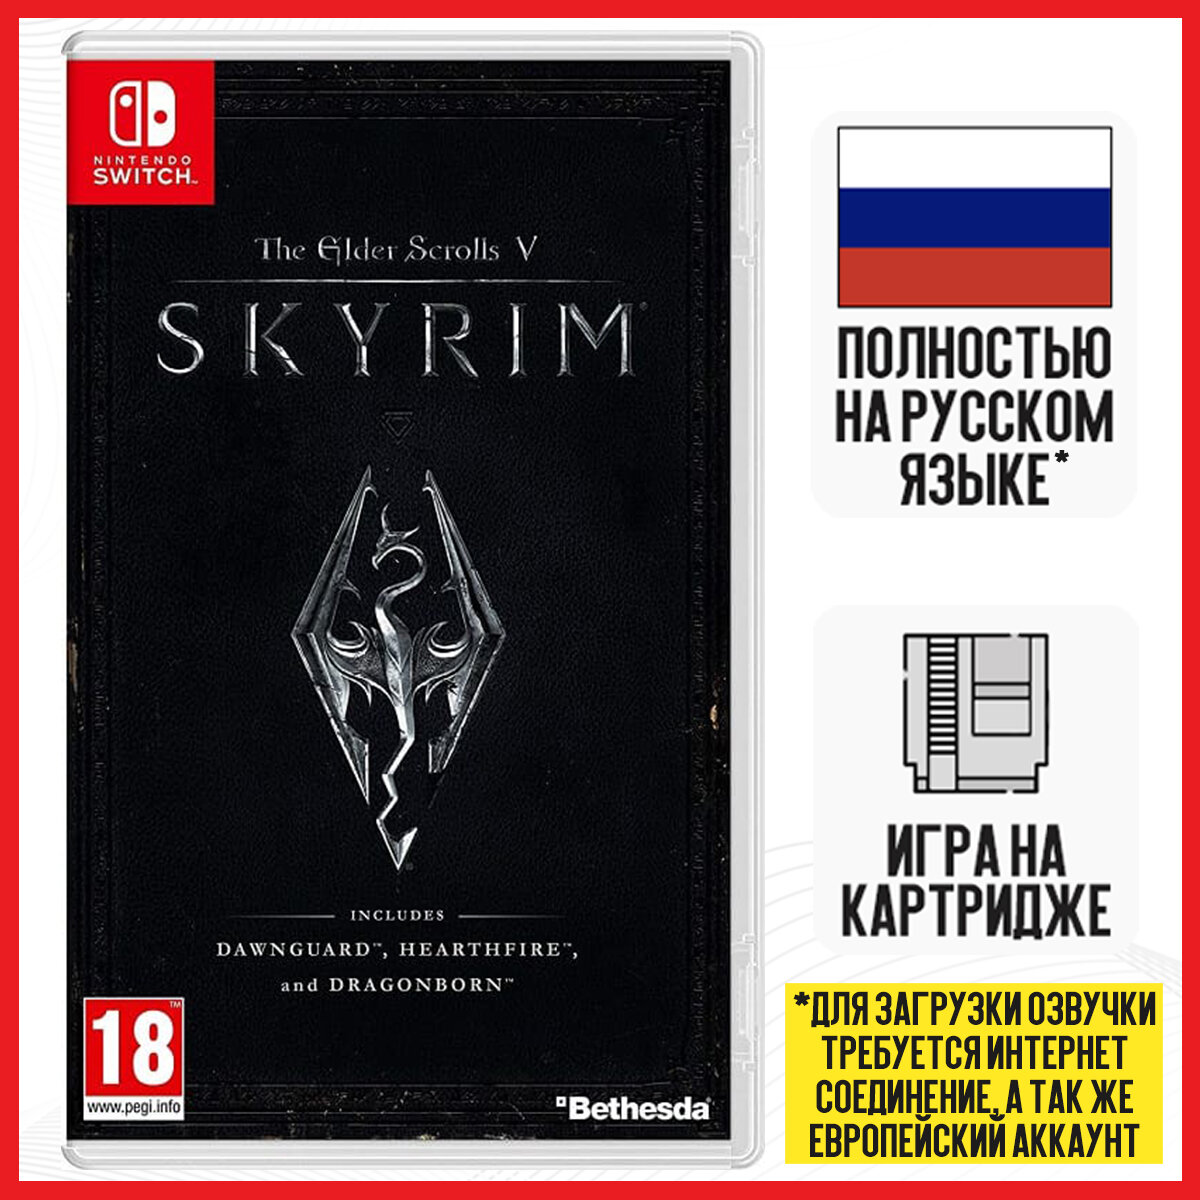 Игра The Elder Scrolls V: Skyrim (SWITCH, русская версия)